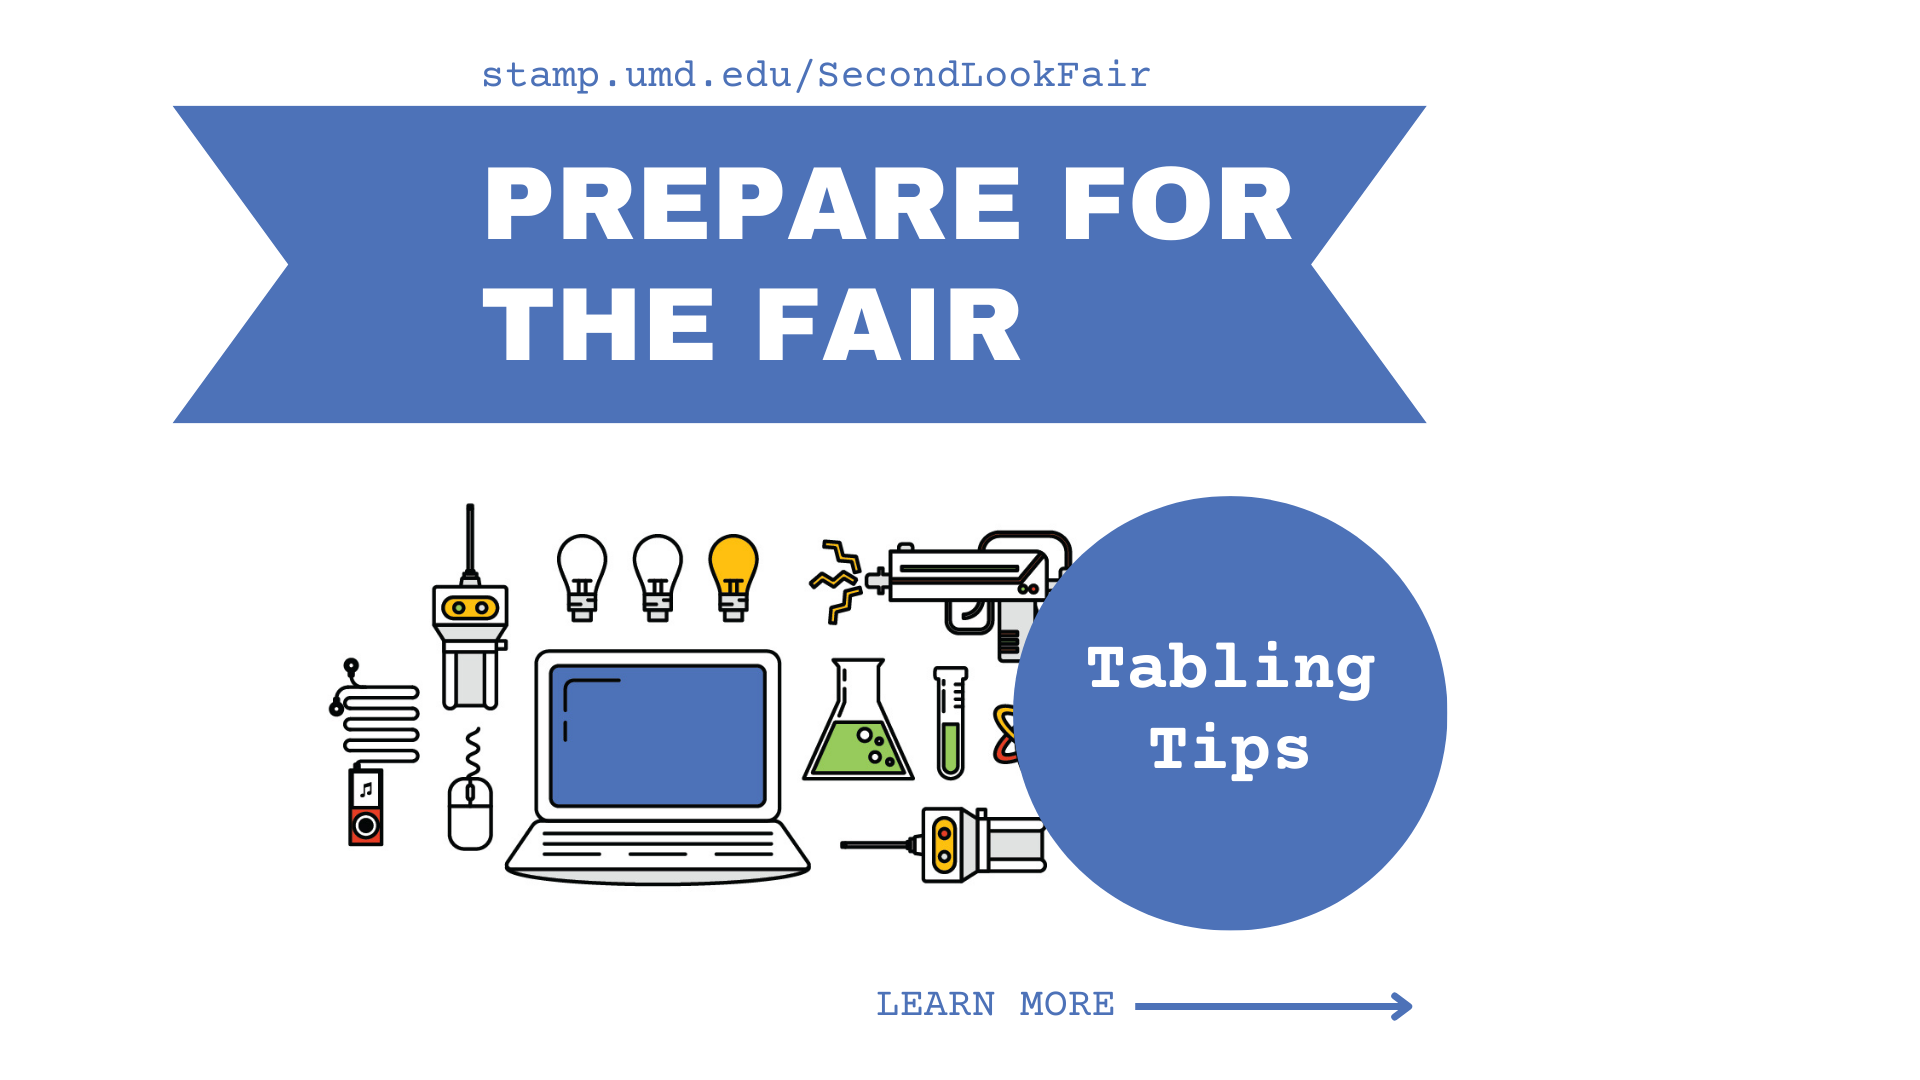 Prepare for the fair - tabling tips